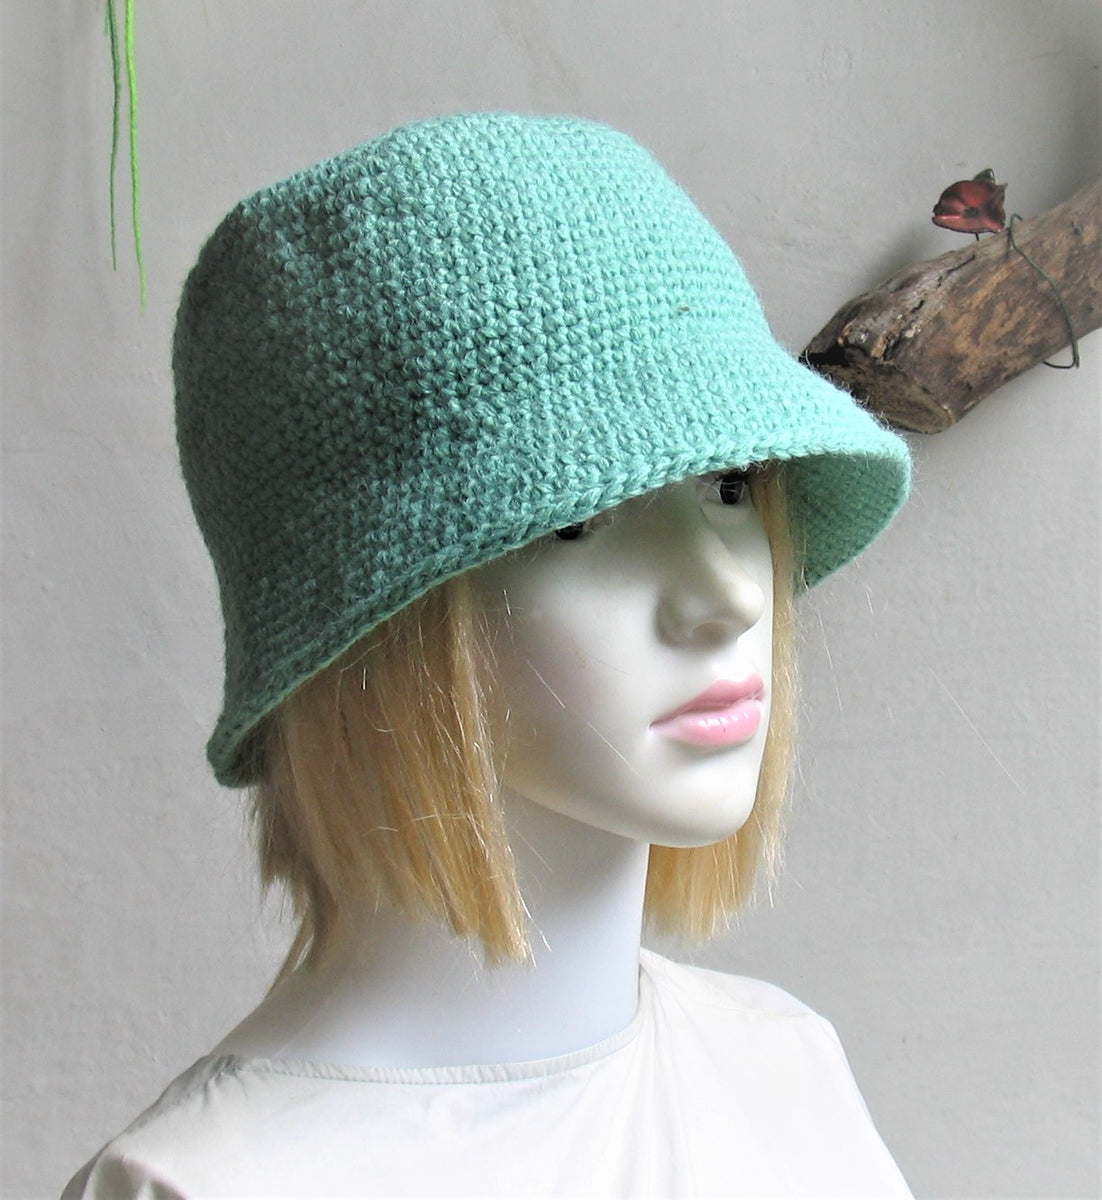 Hoooked  DIY Crochet Kit Summer Hat Nice Lush Mint